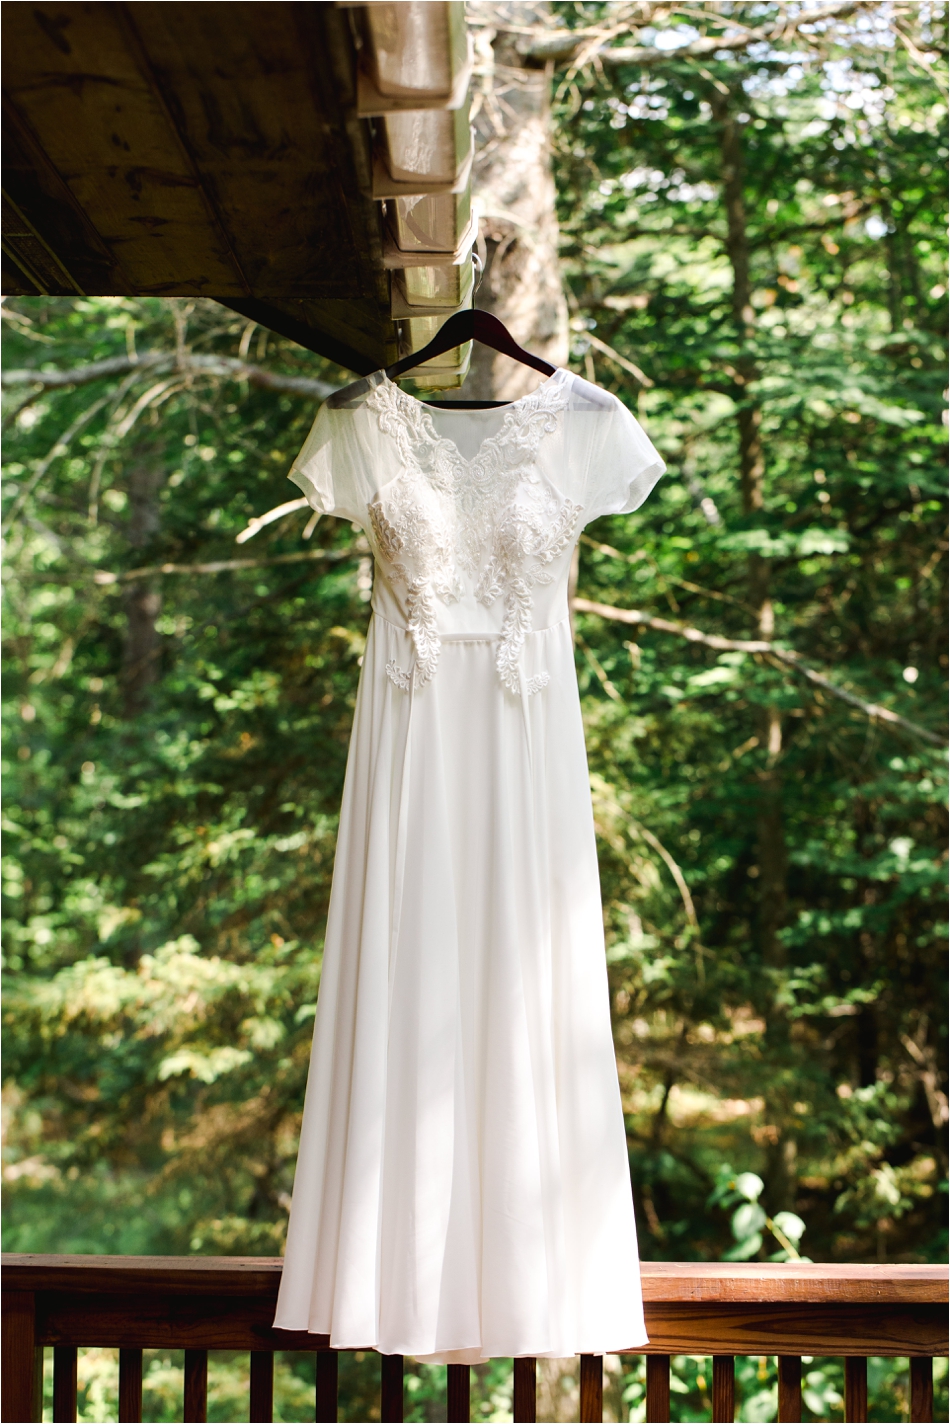 Handmade Wedding Dress by Alex Veil Bridal | Shaw Photo Co.